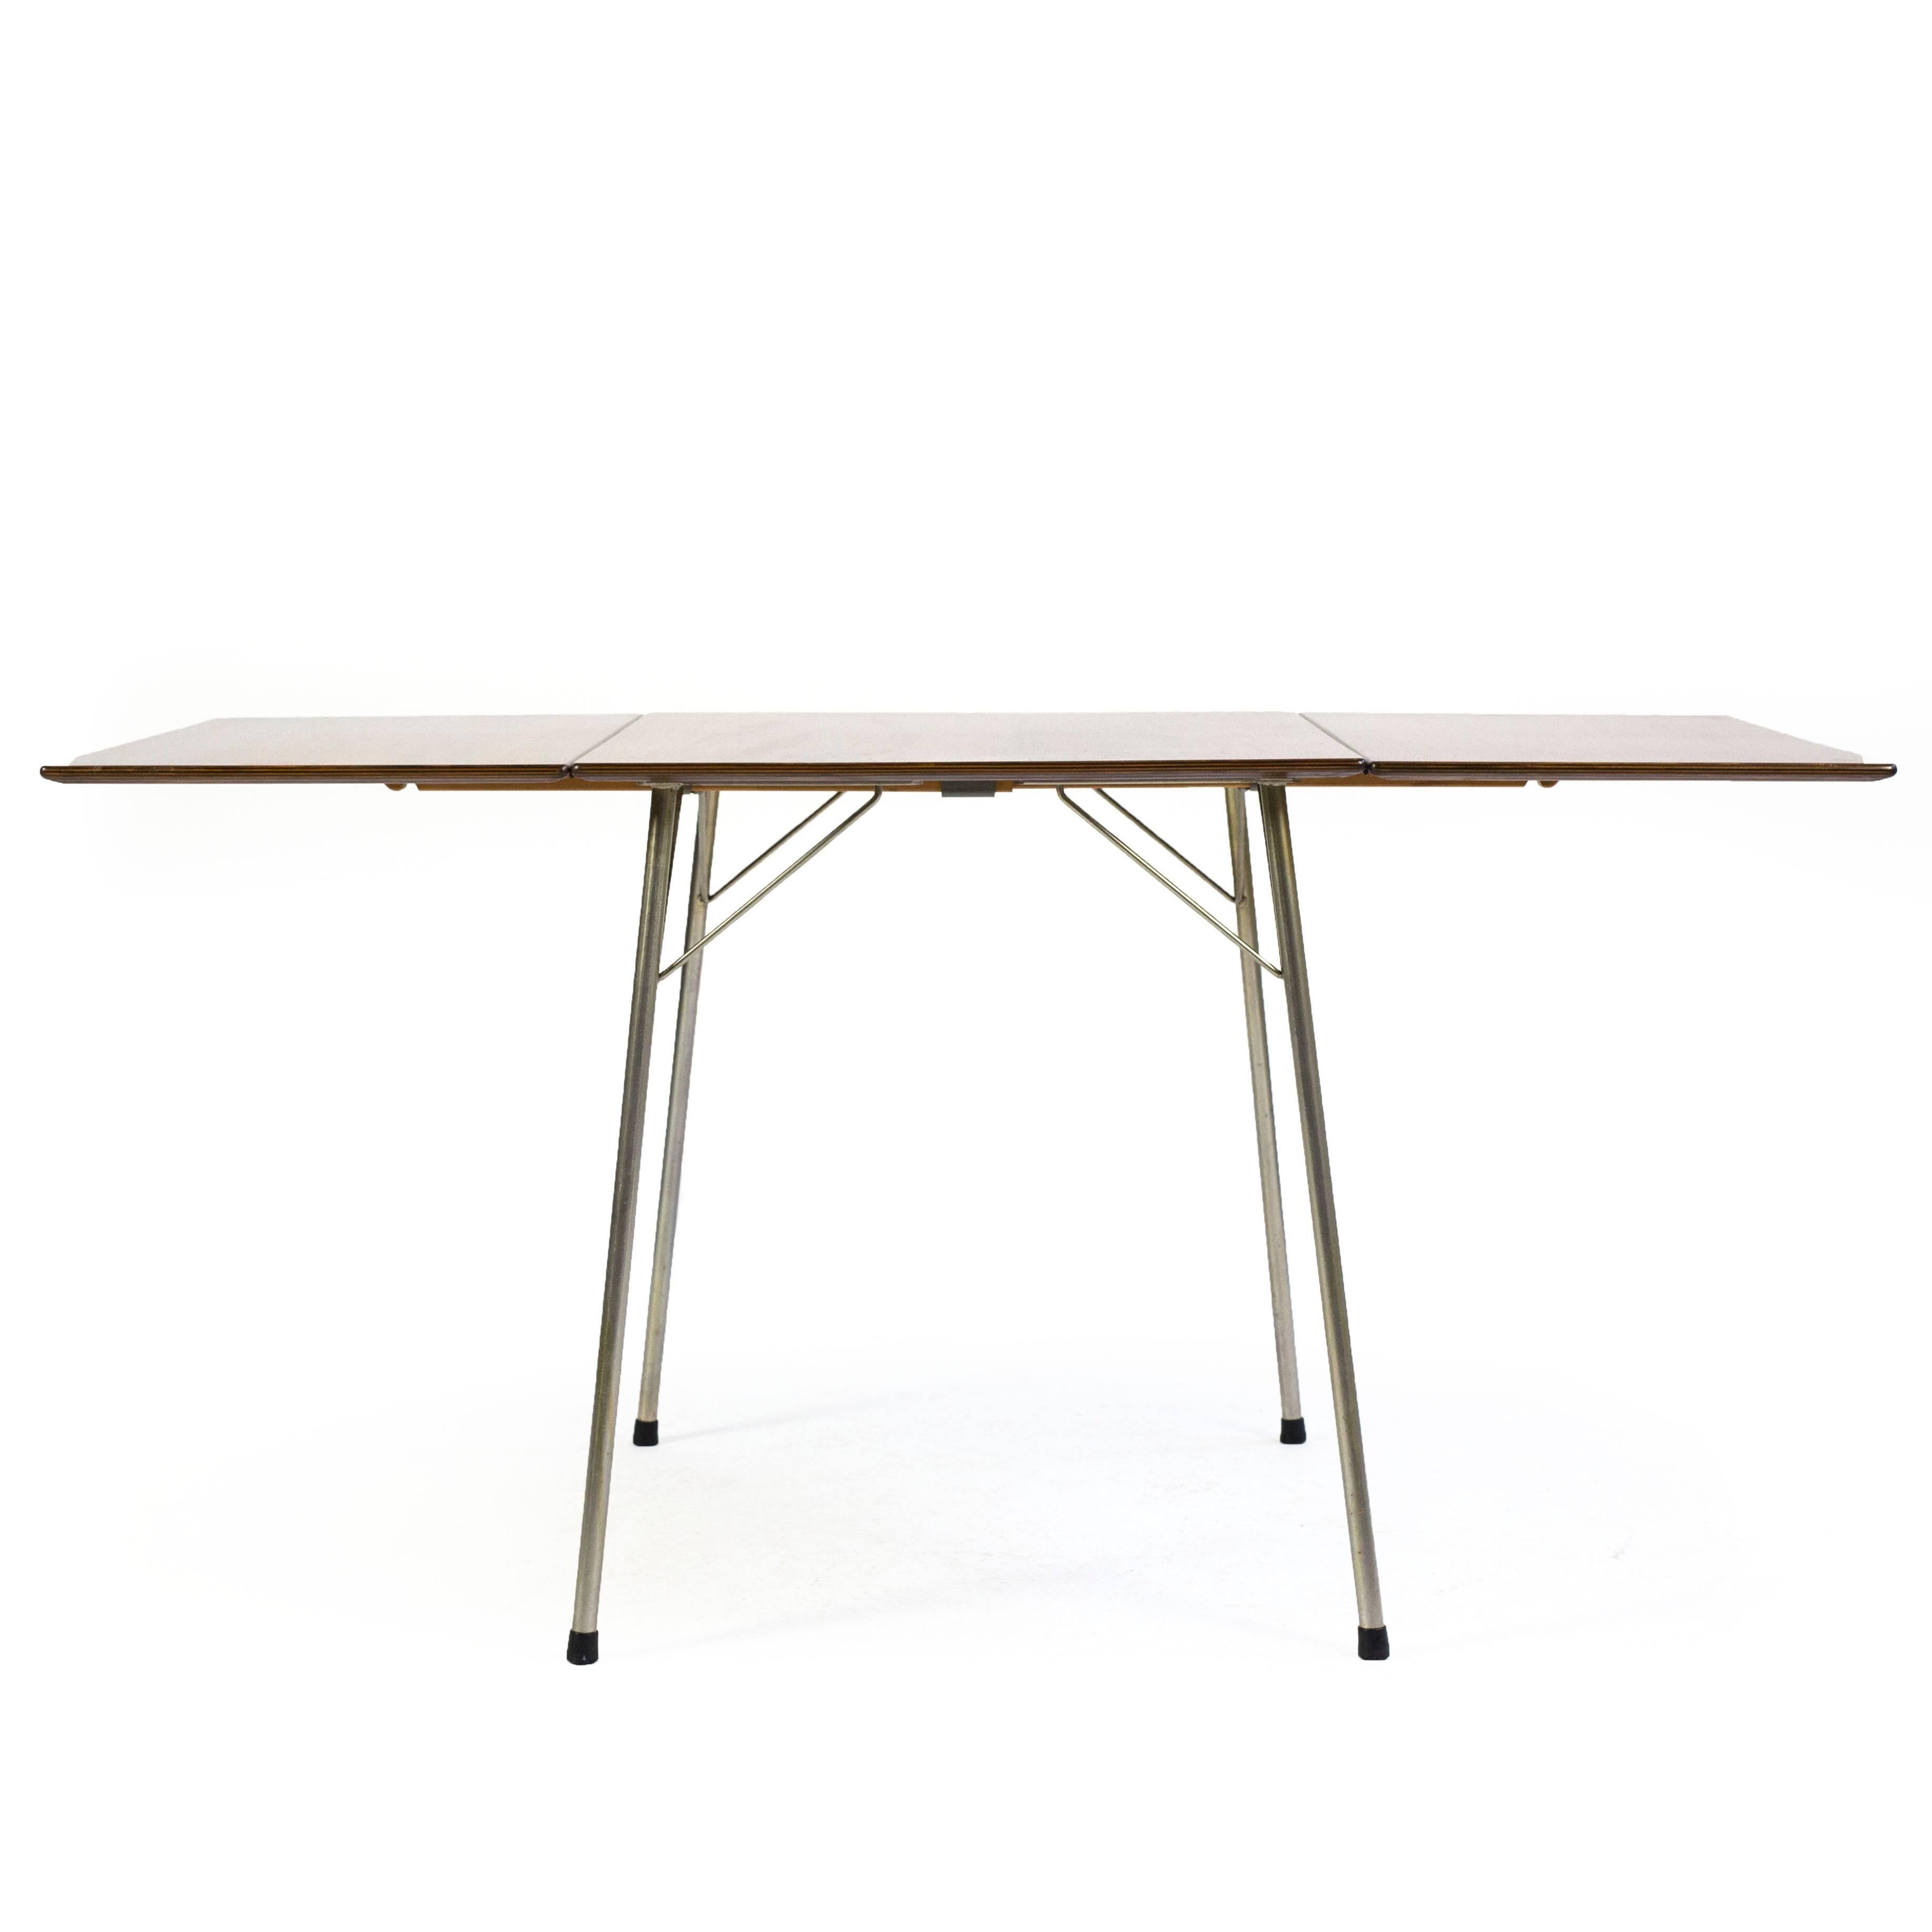 Danish Arne Jacobsen Rosewood kitchen table